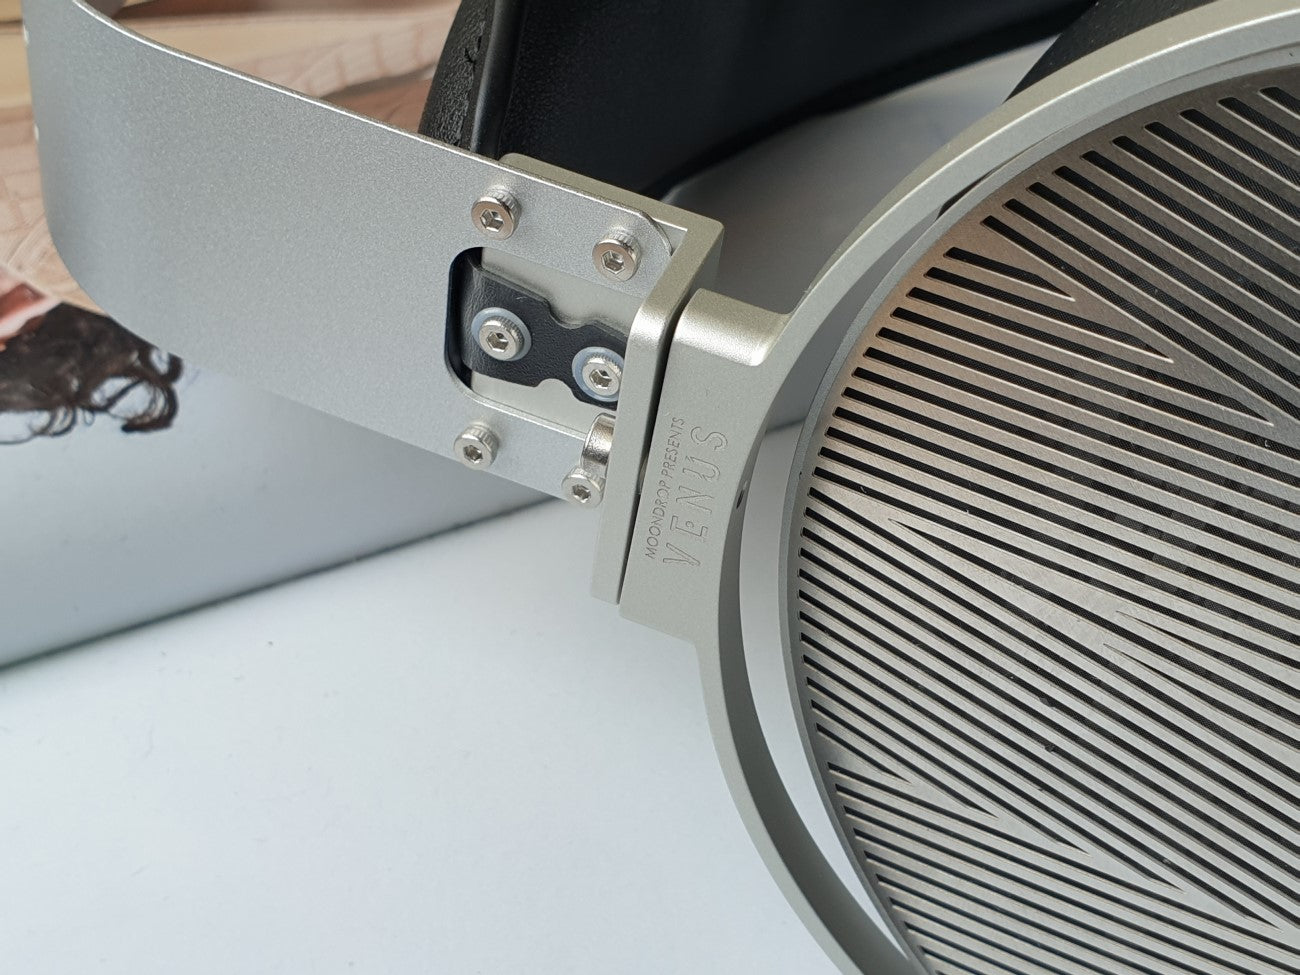 [5% off + 50% off for Spinfit] Moondrop VENUS Flagship Full-Size Planar Magnetic Headphone 100mm Sub-Nanometer Diaphragm